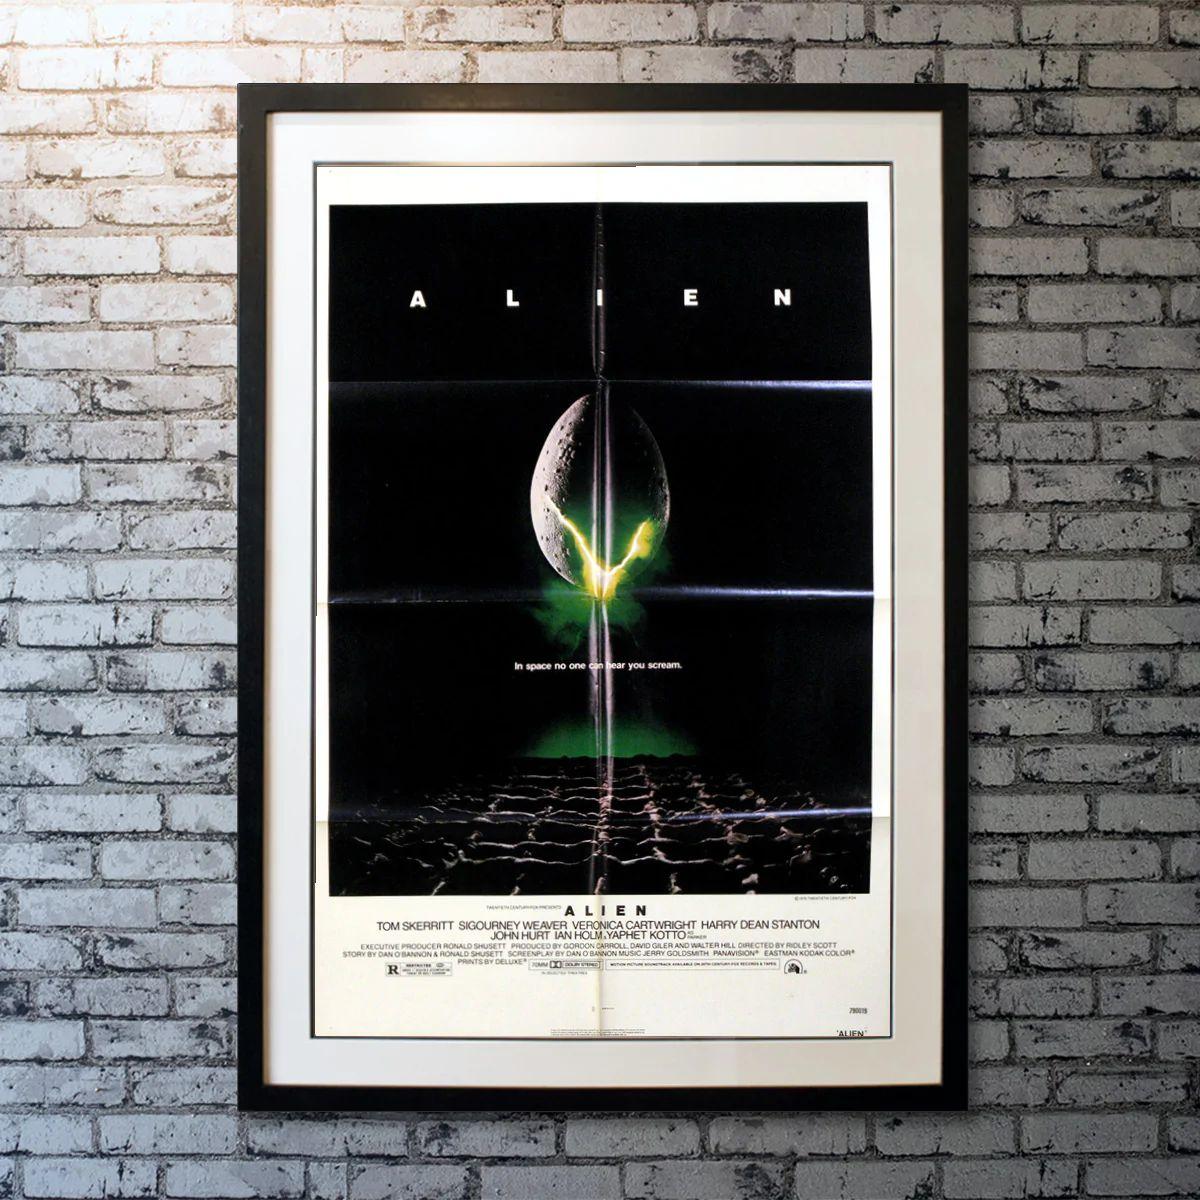 Alien, Unframed Poster, 1979

Original One Sheet (27 x 41 inches). Rare 1979 NSS version original 